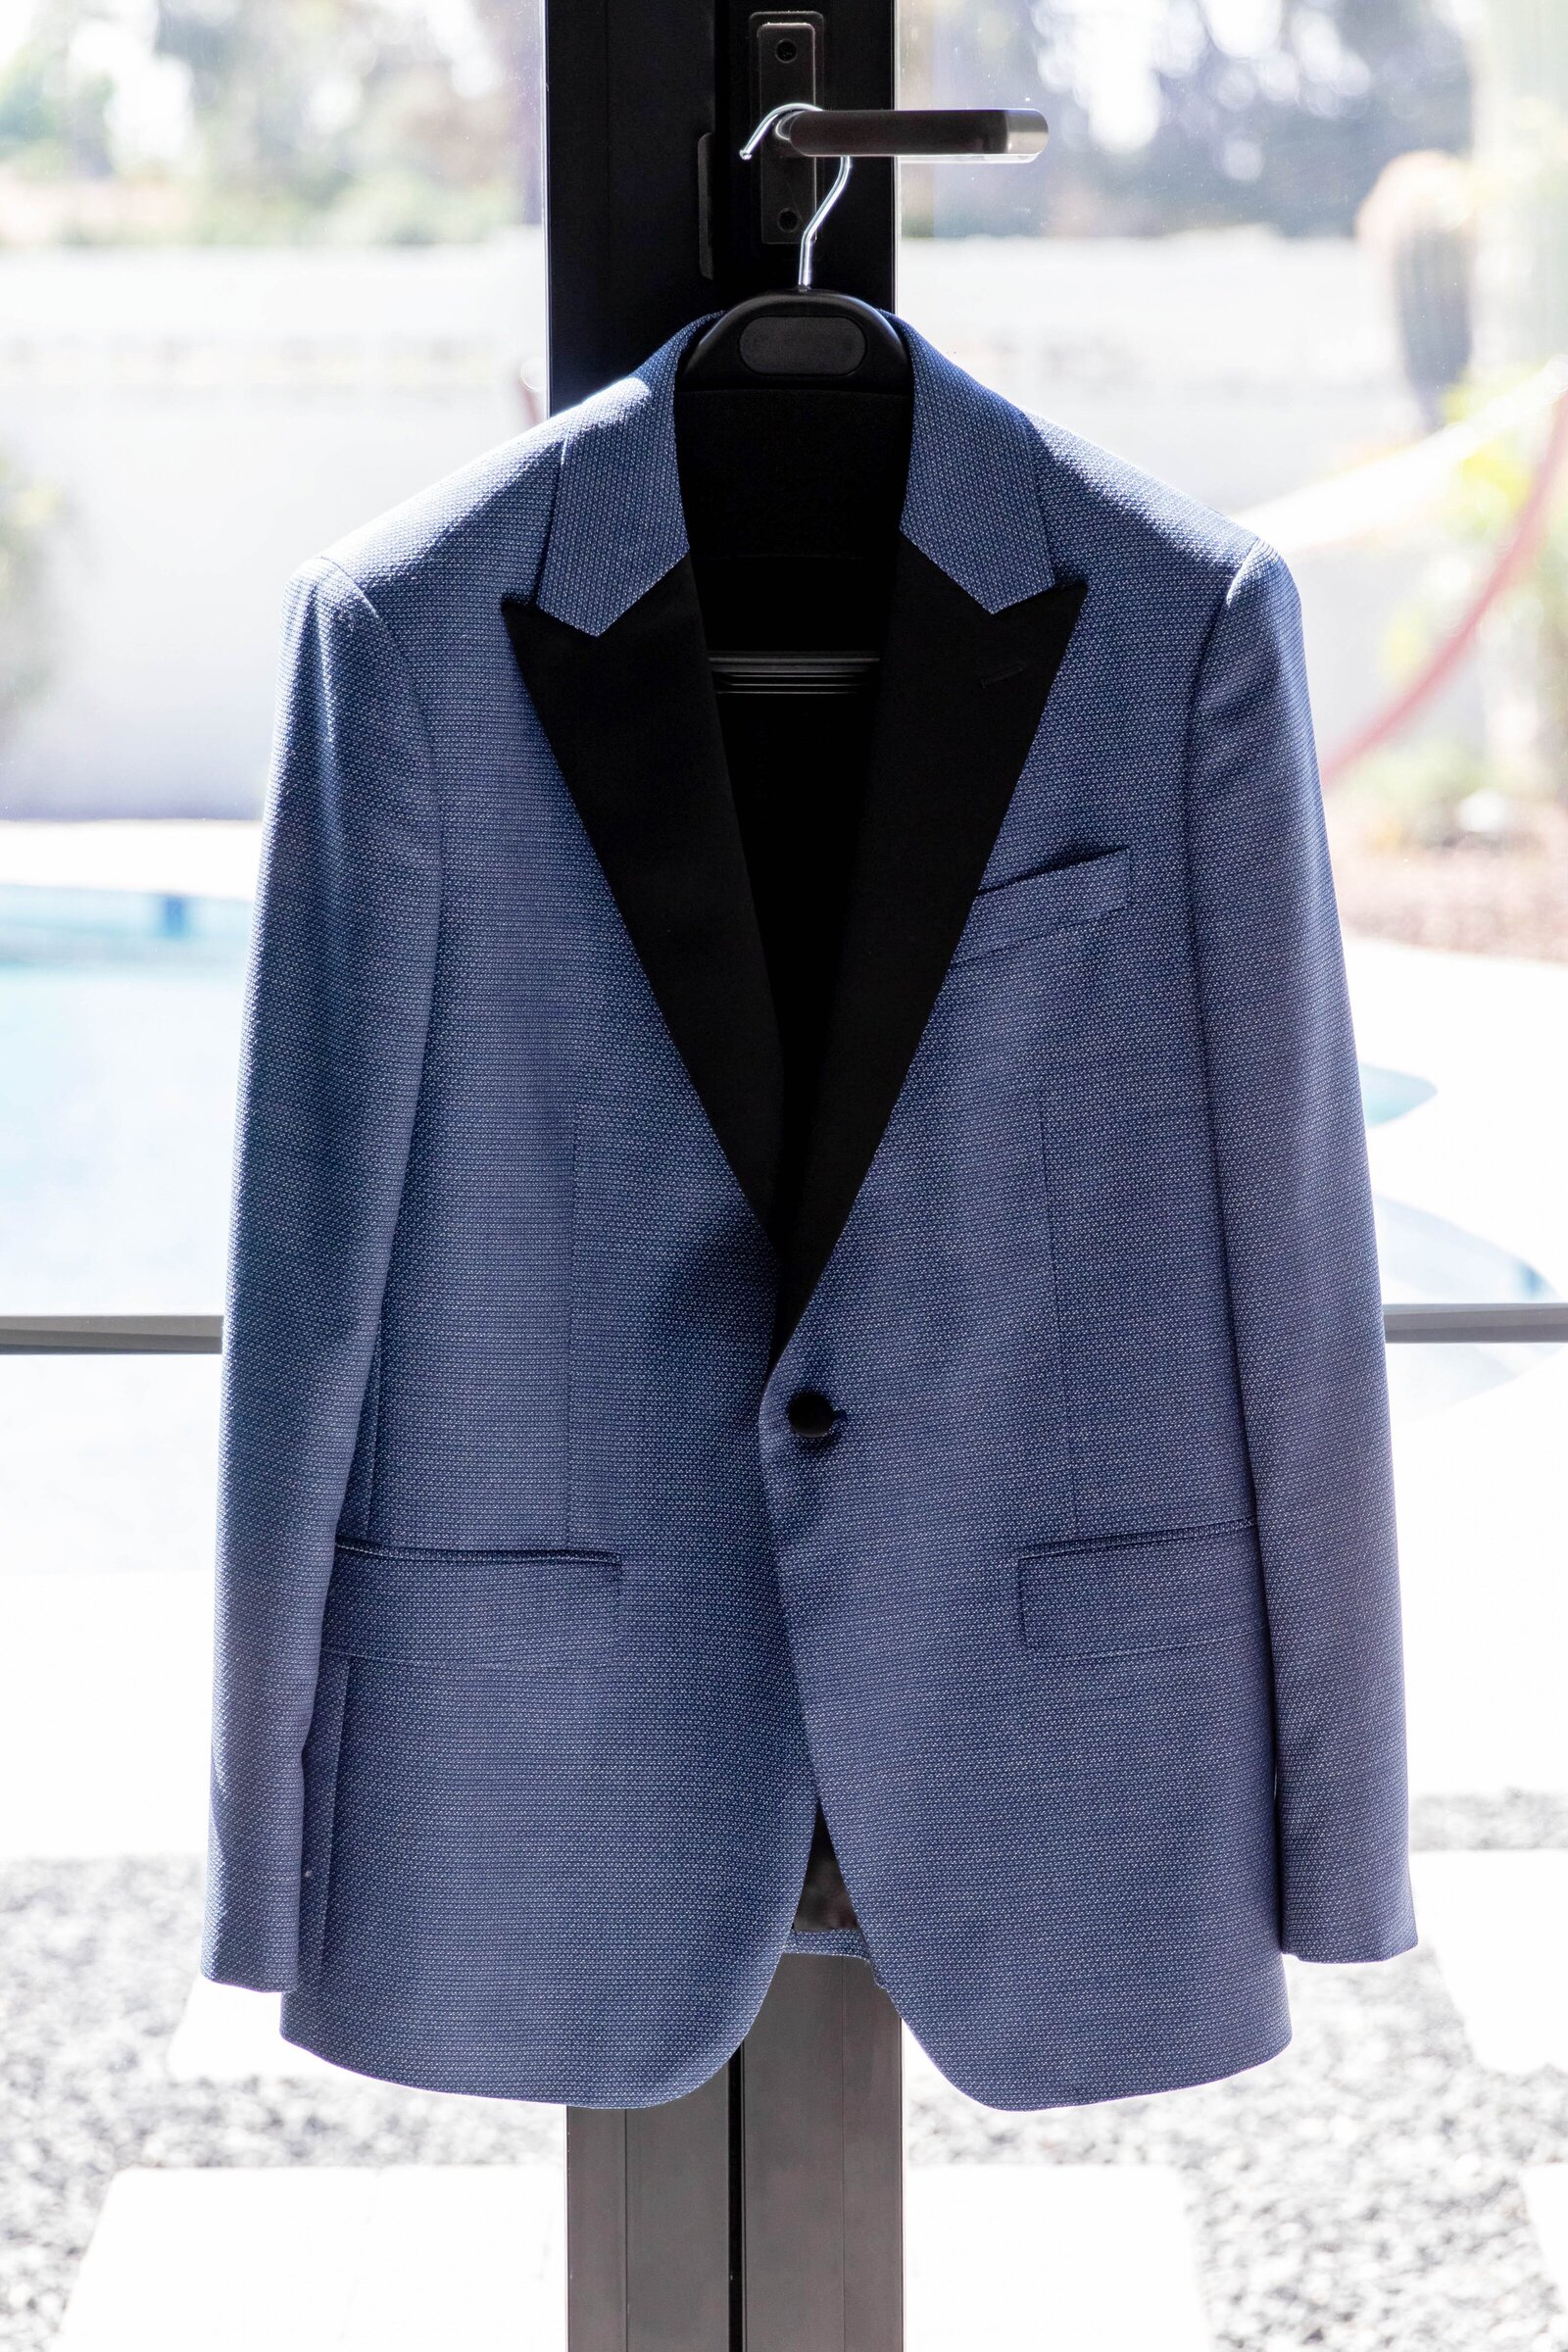 groom-blue-suit-jacket